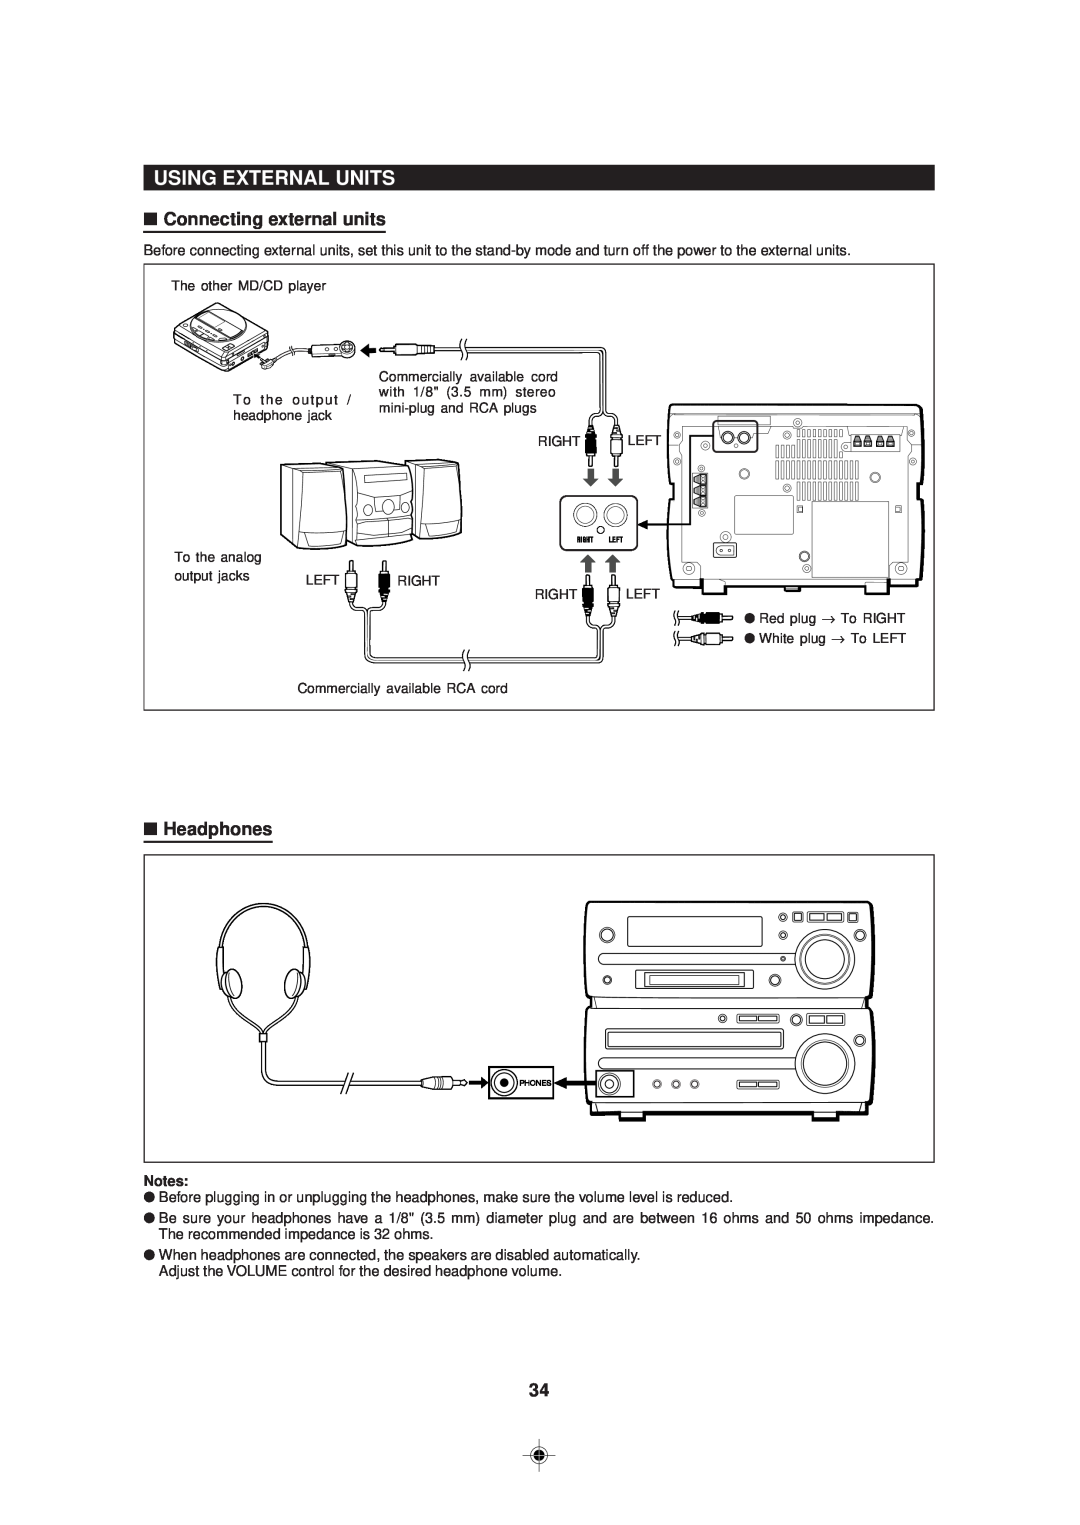 Sharp MD-MX30 operation manual Using External Units, Connecting external units, Headphones 